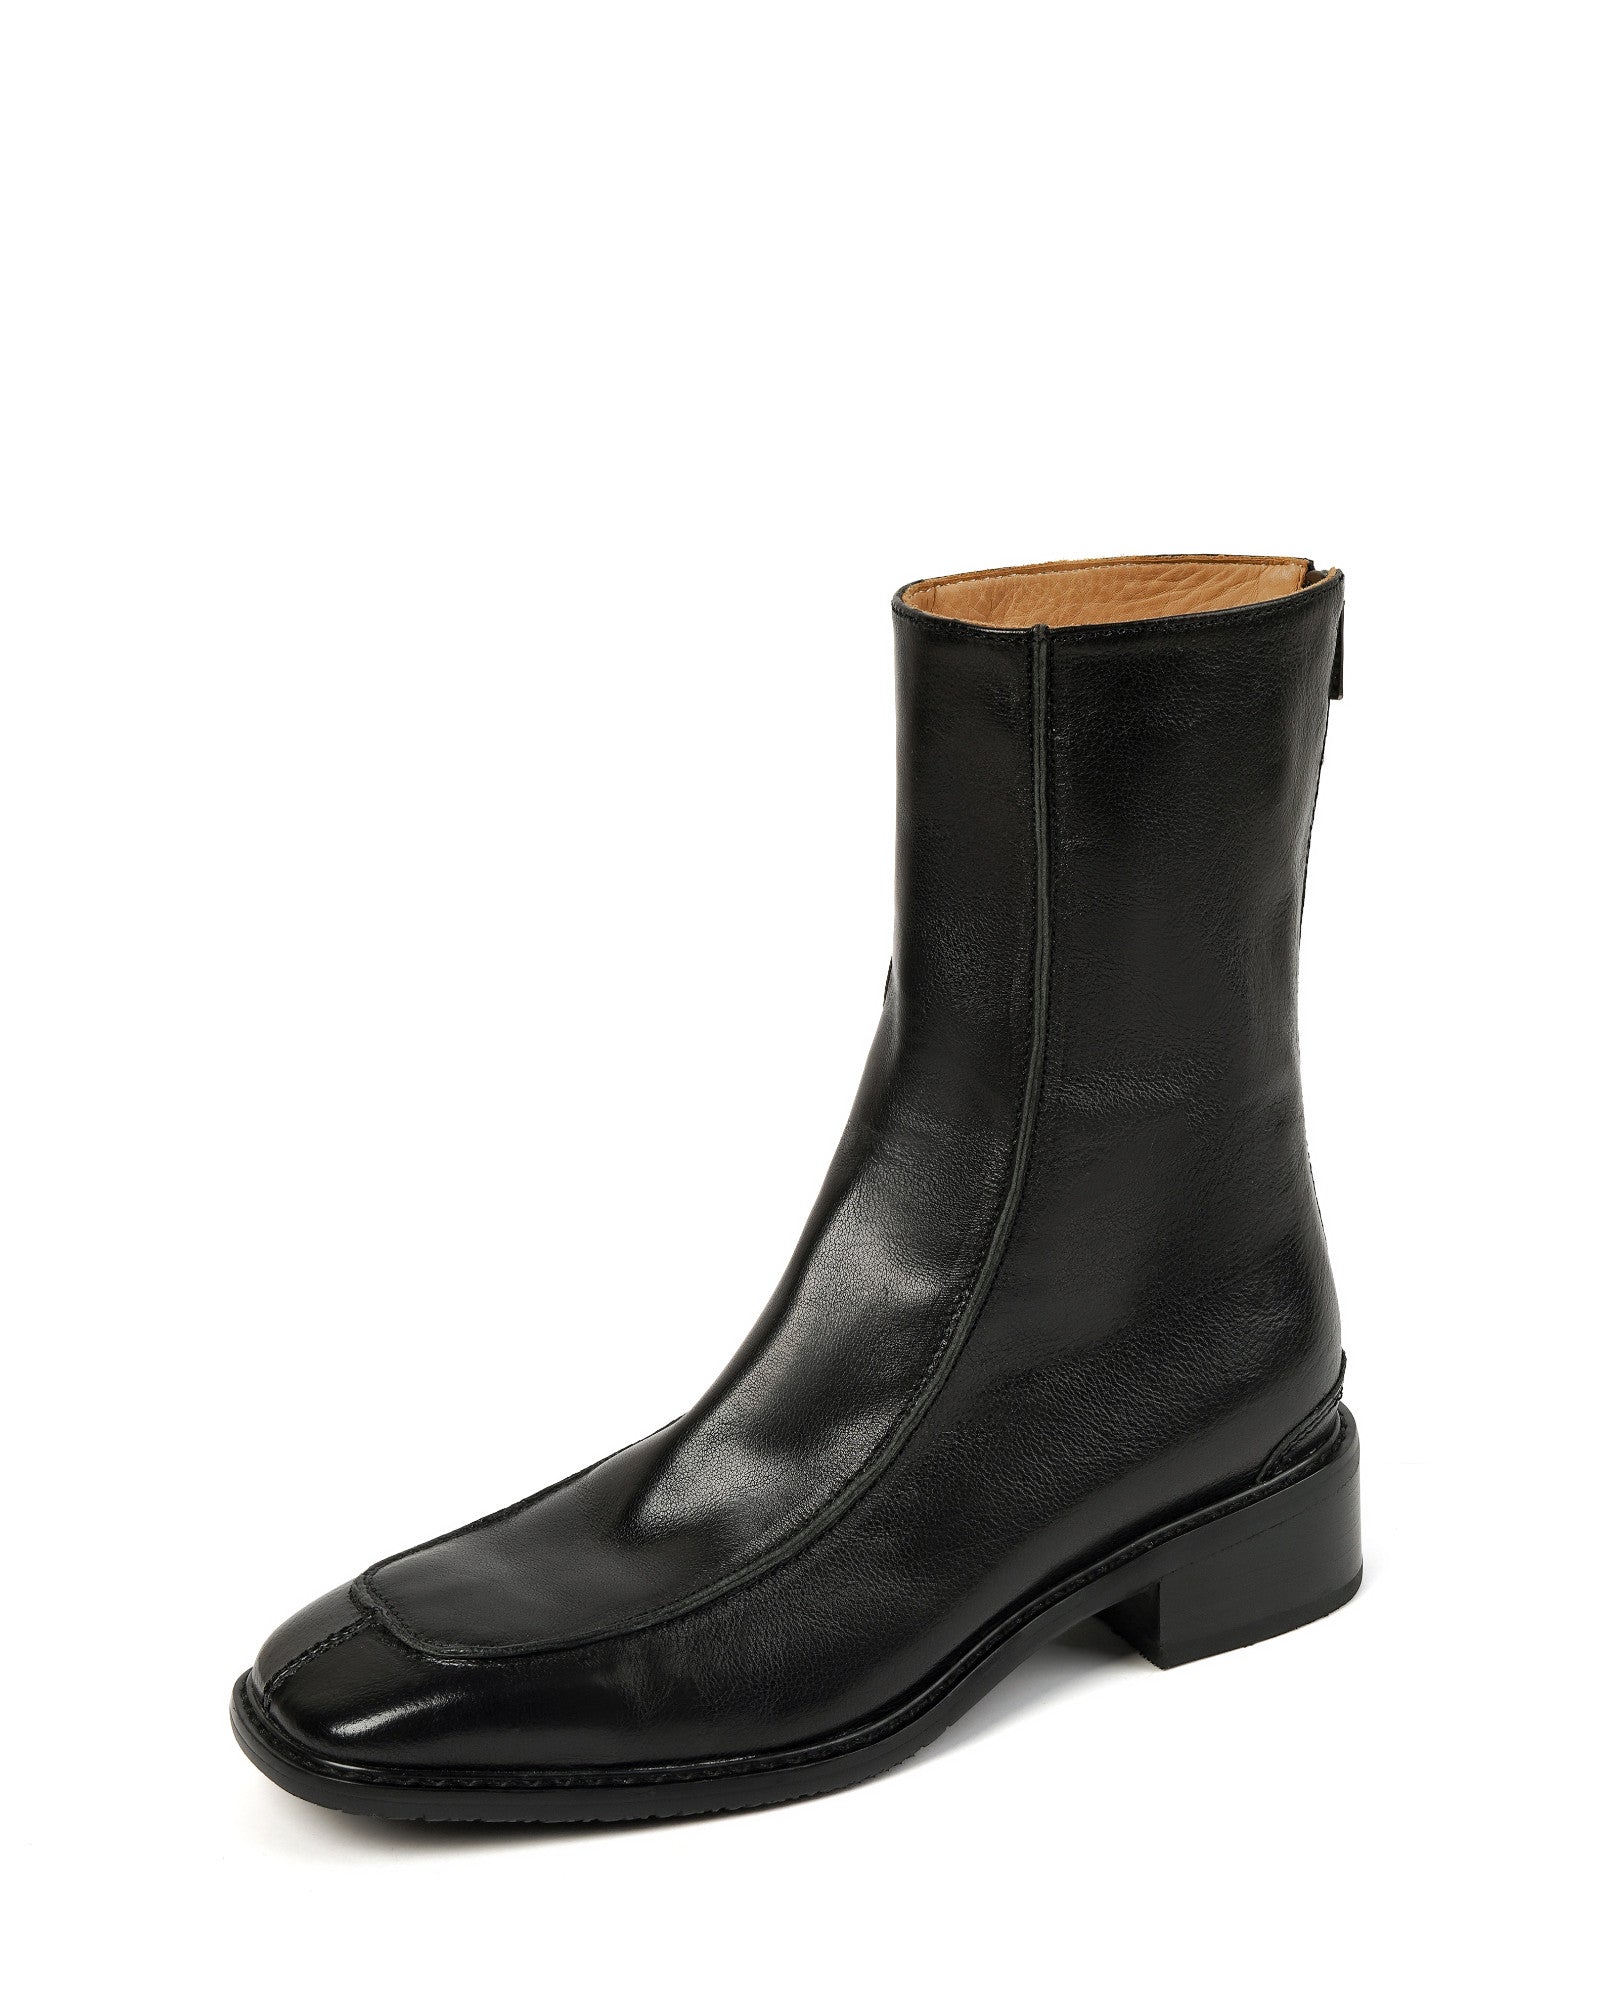 302-square-toe-mid-calf-leather-boots-black